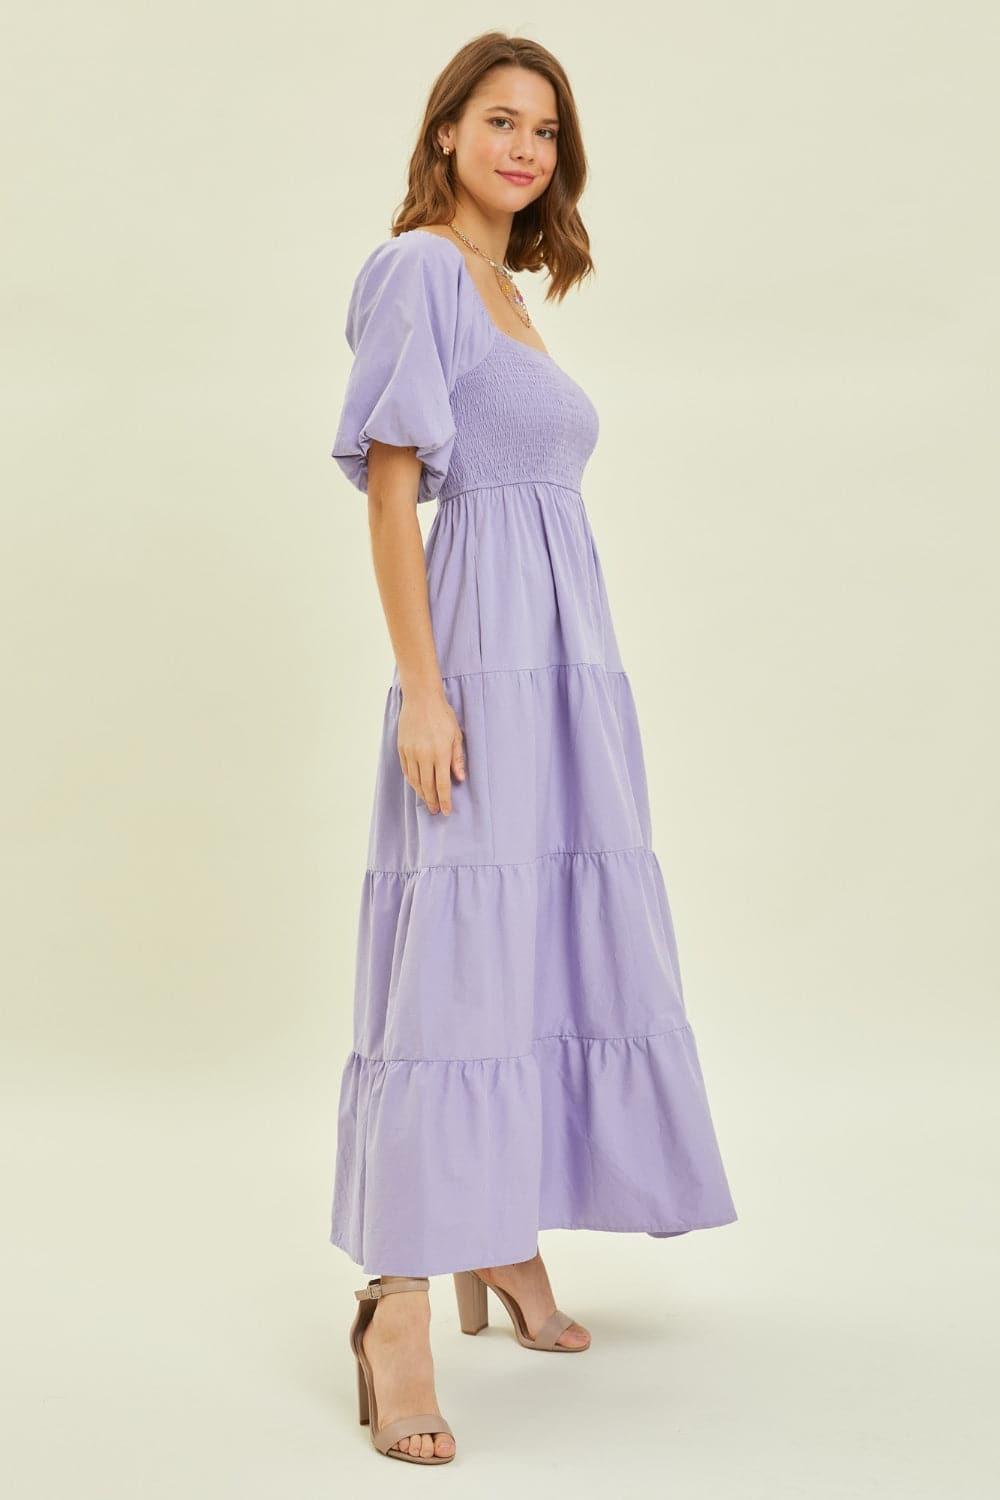 HEYSON Puff Sleeve Tiered Ruffled Poplin Dress - SwagglyLife Home & Fashion